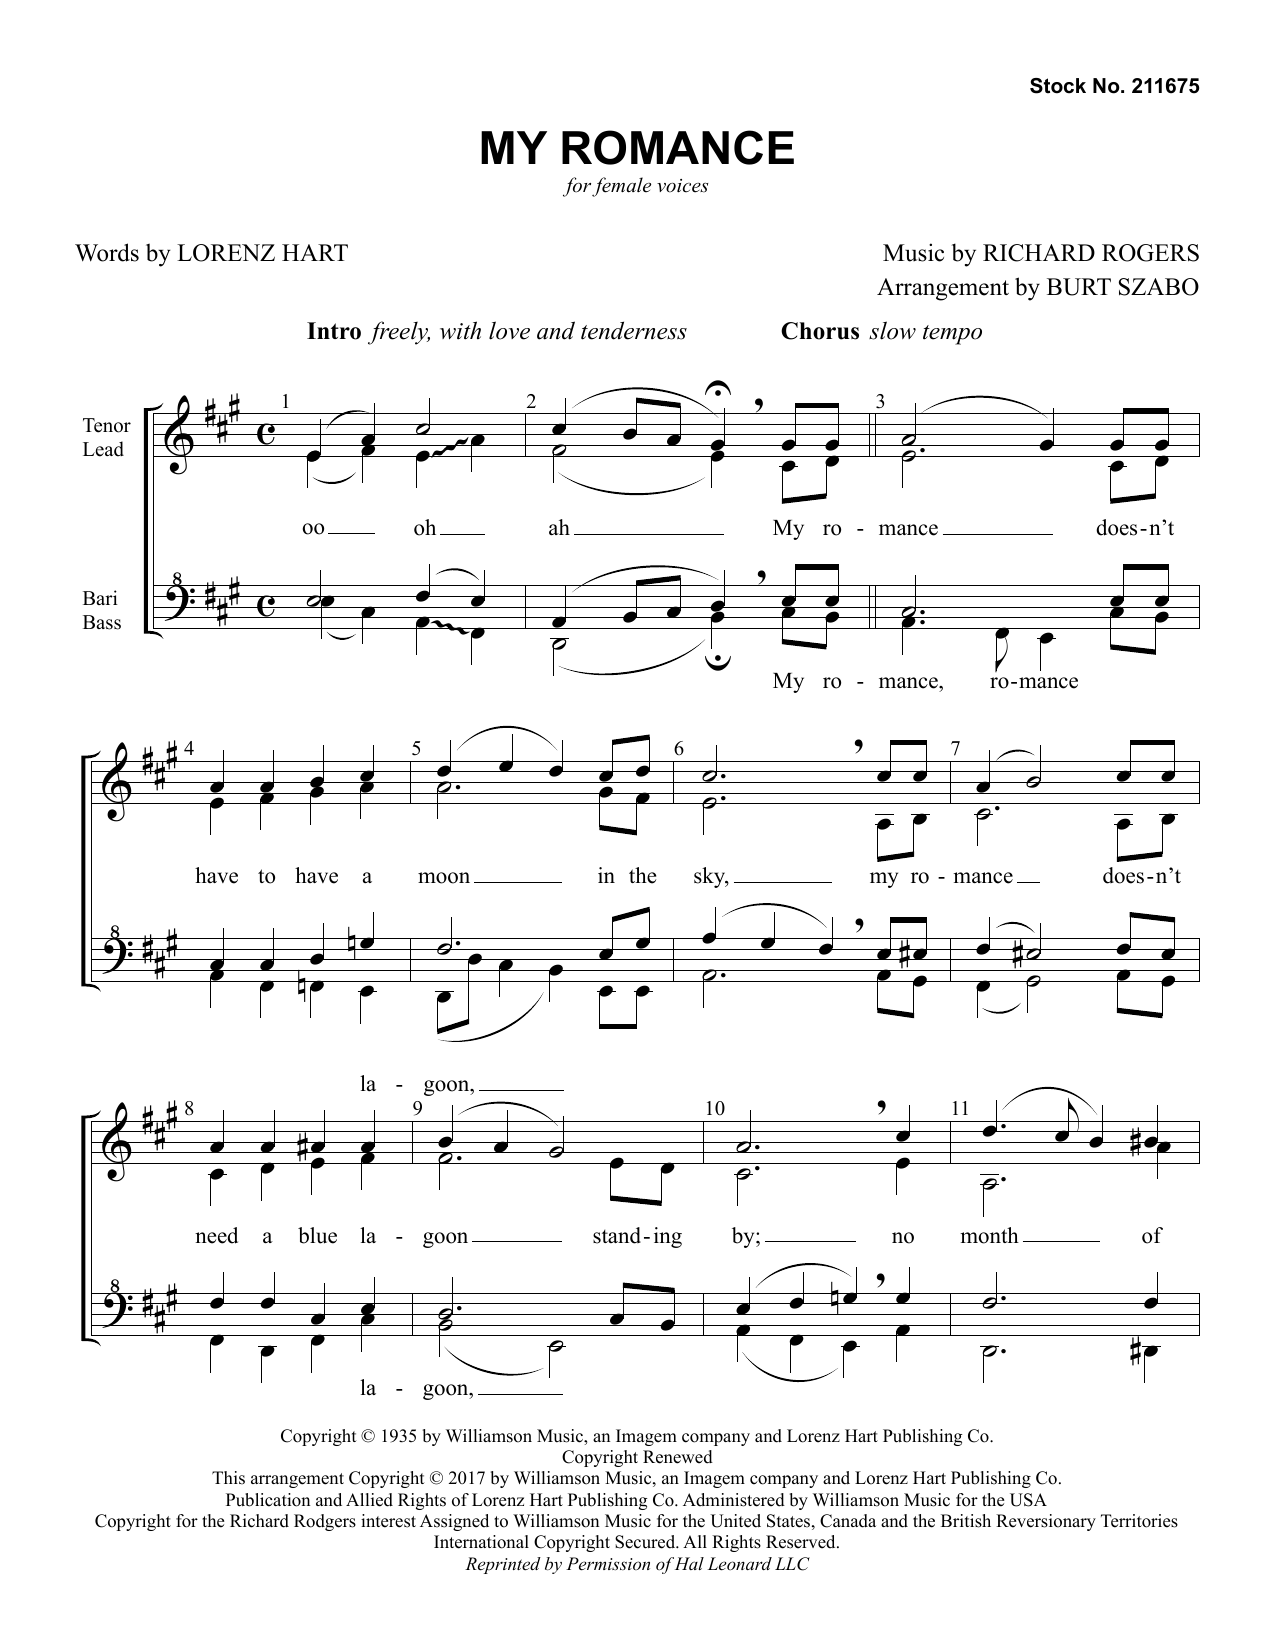 Rodgers & Hart My Romance (arr. Burt Szabo) Sheet Music Notes & Chords for TTBB Choir - Download or Print PDF